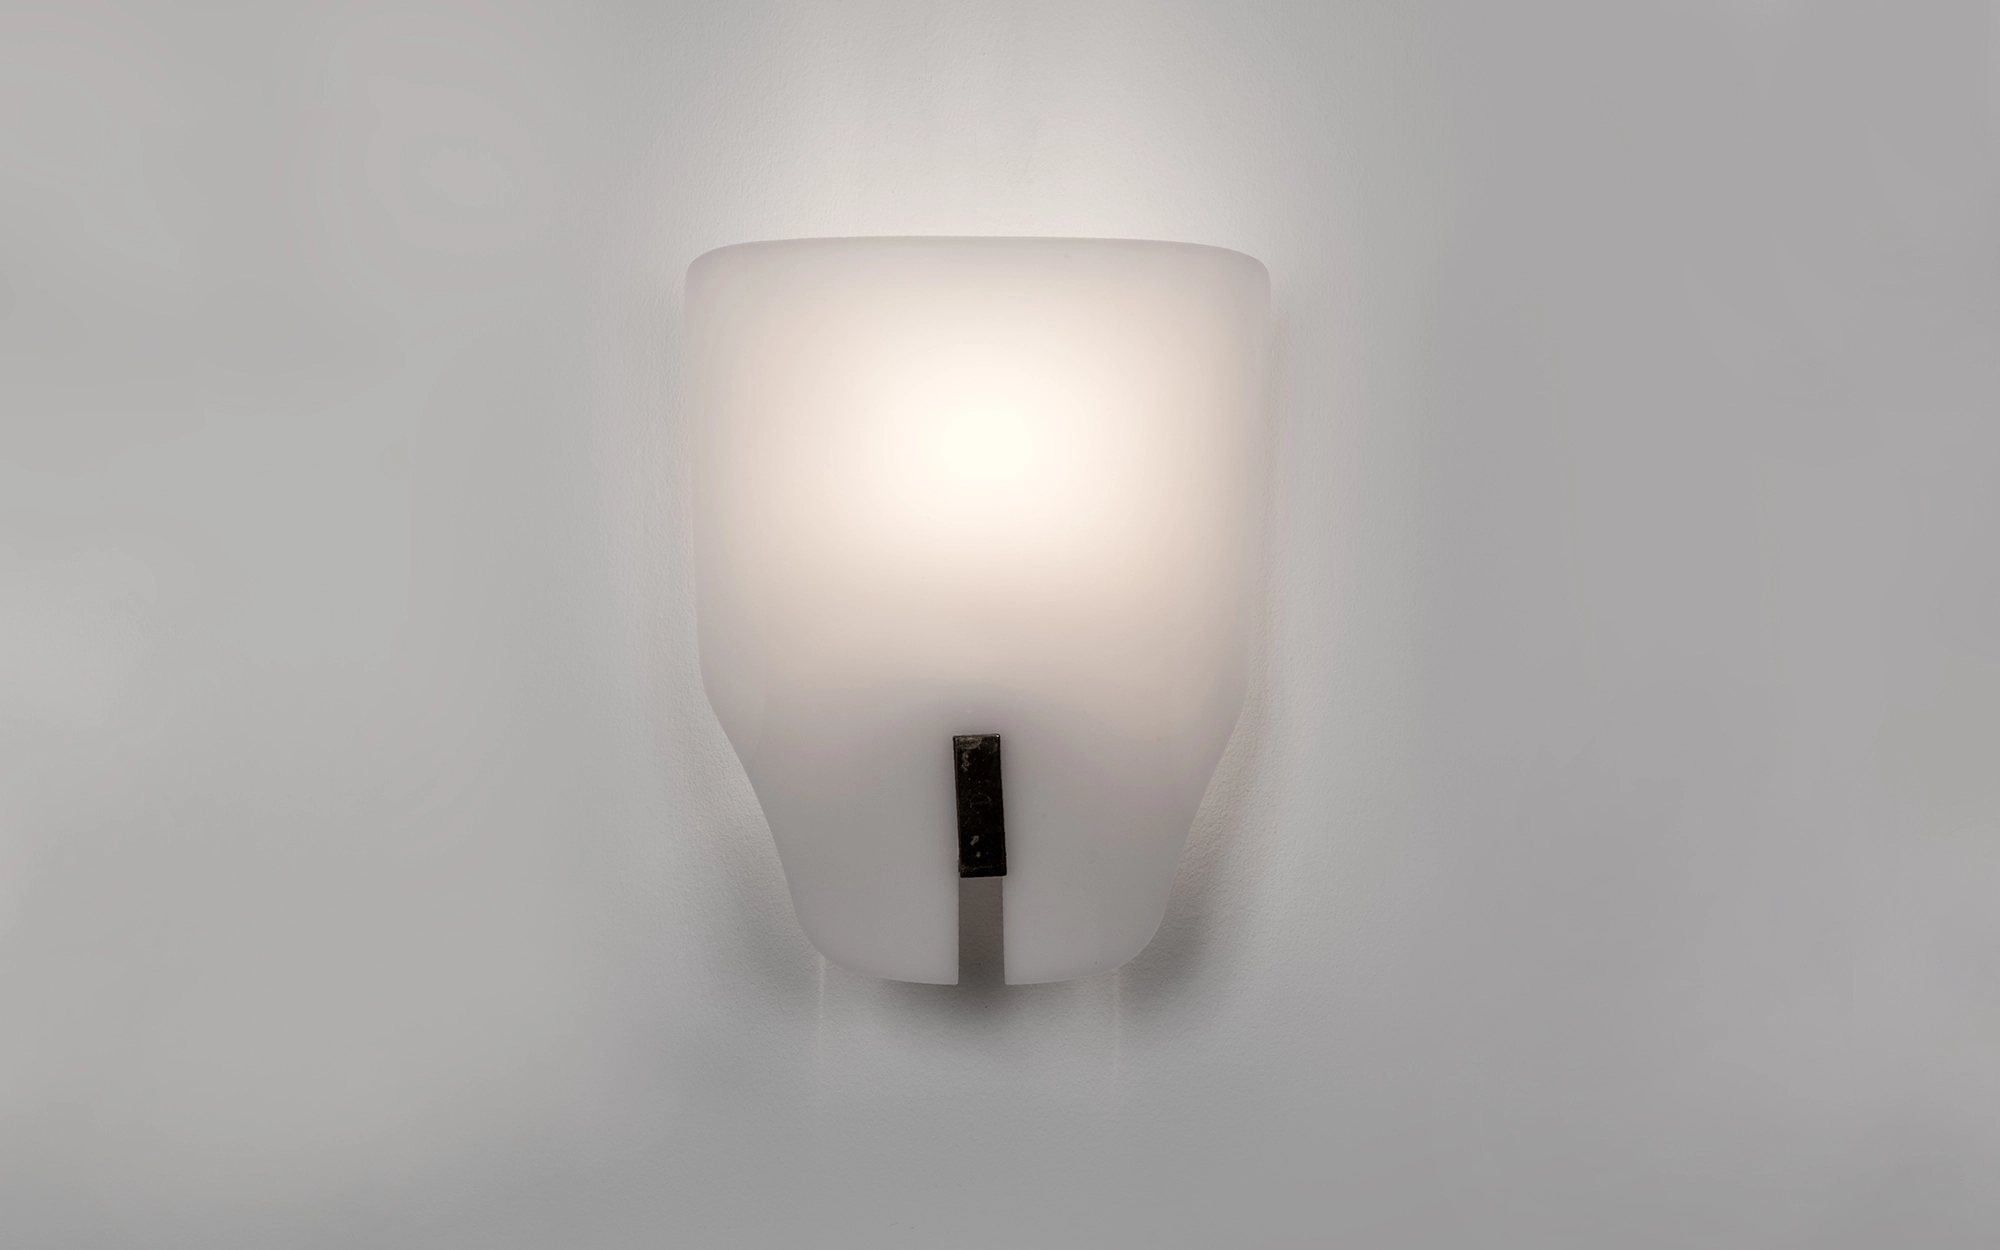 167px - Gino Sarfatti - Ceiling light - Galerie kreo